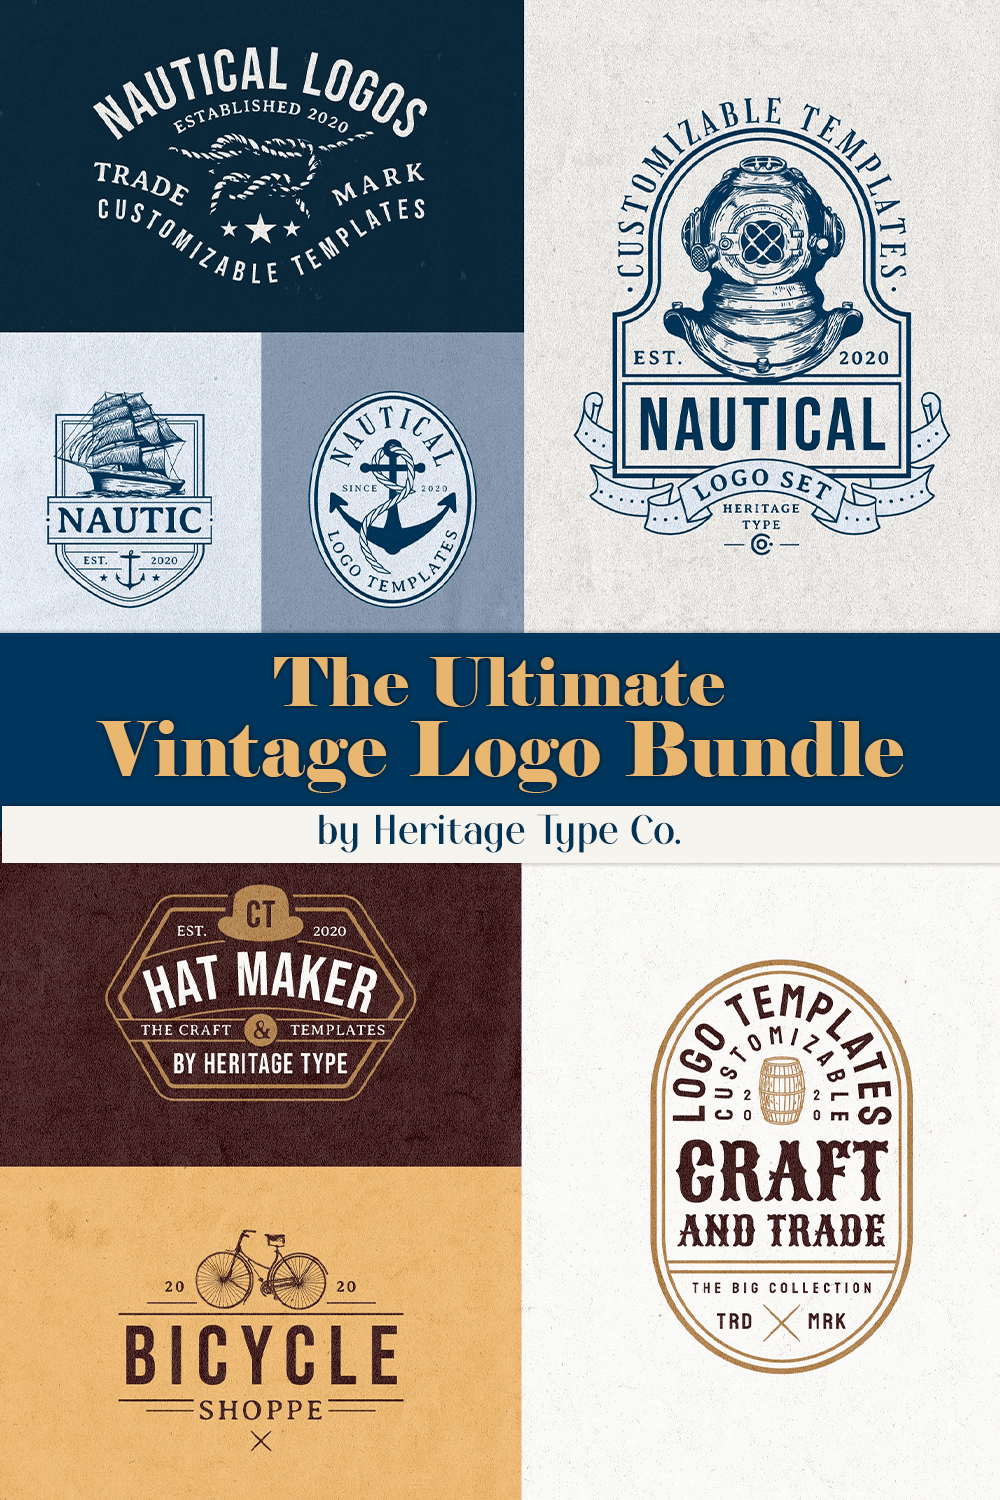 Many uses for the ultimate vintage logo bundle.